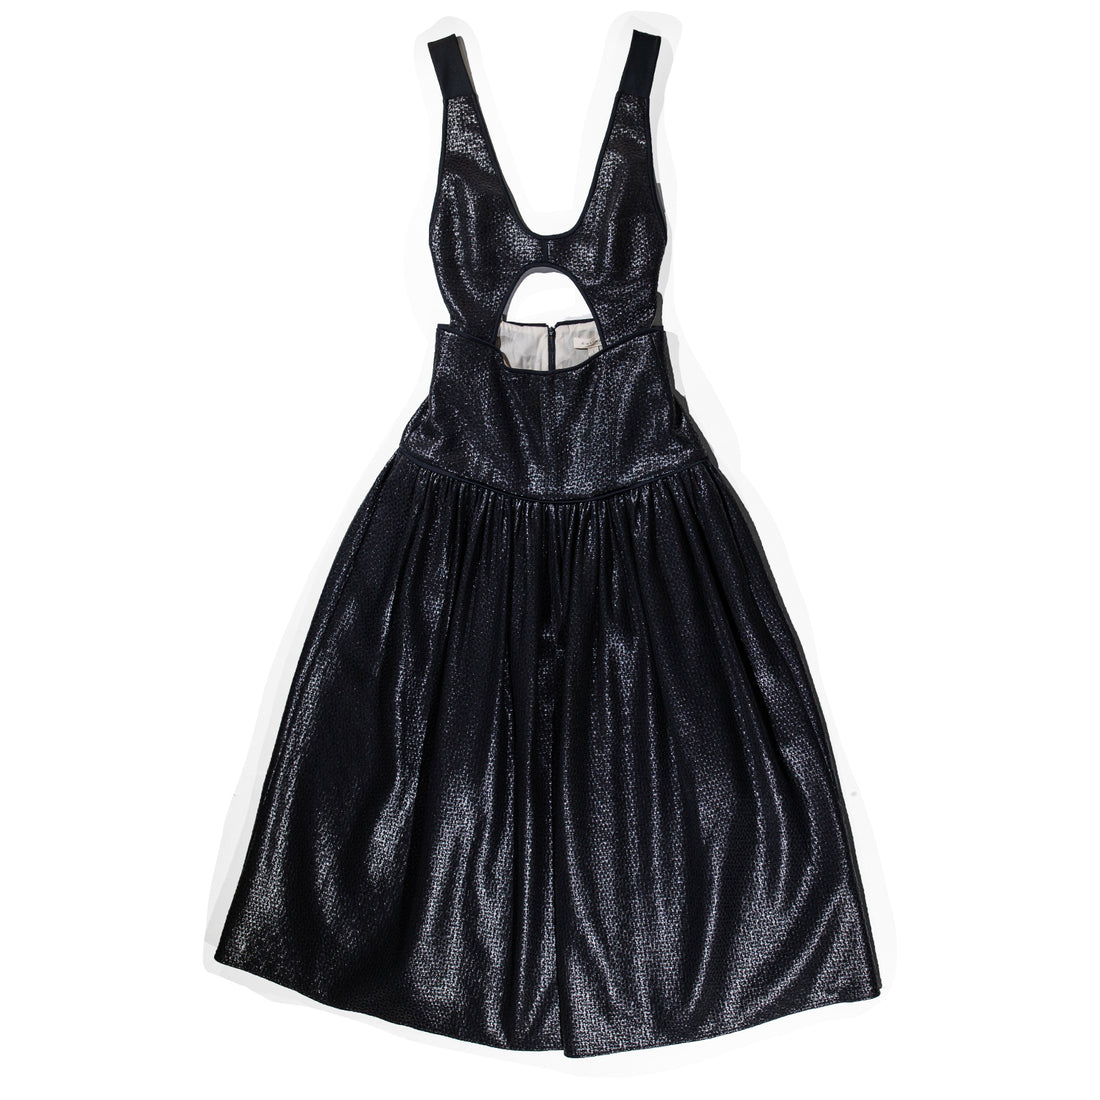 Diotima Corpetto Dress in Black Basket Weave